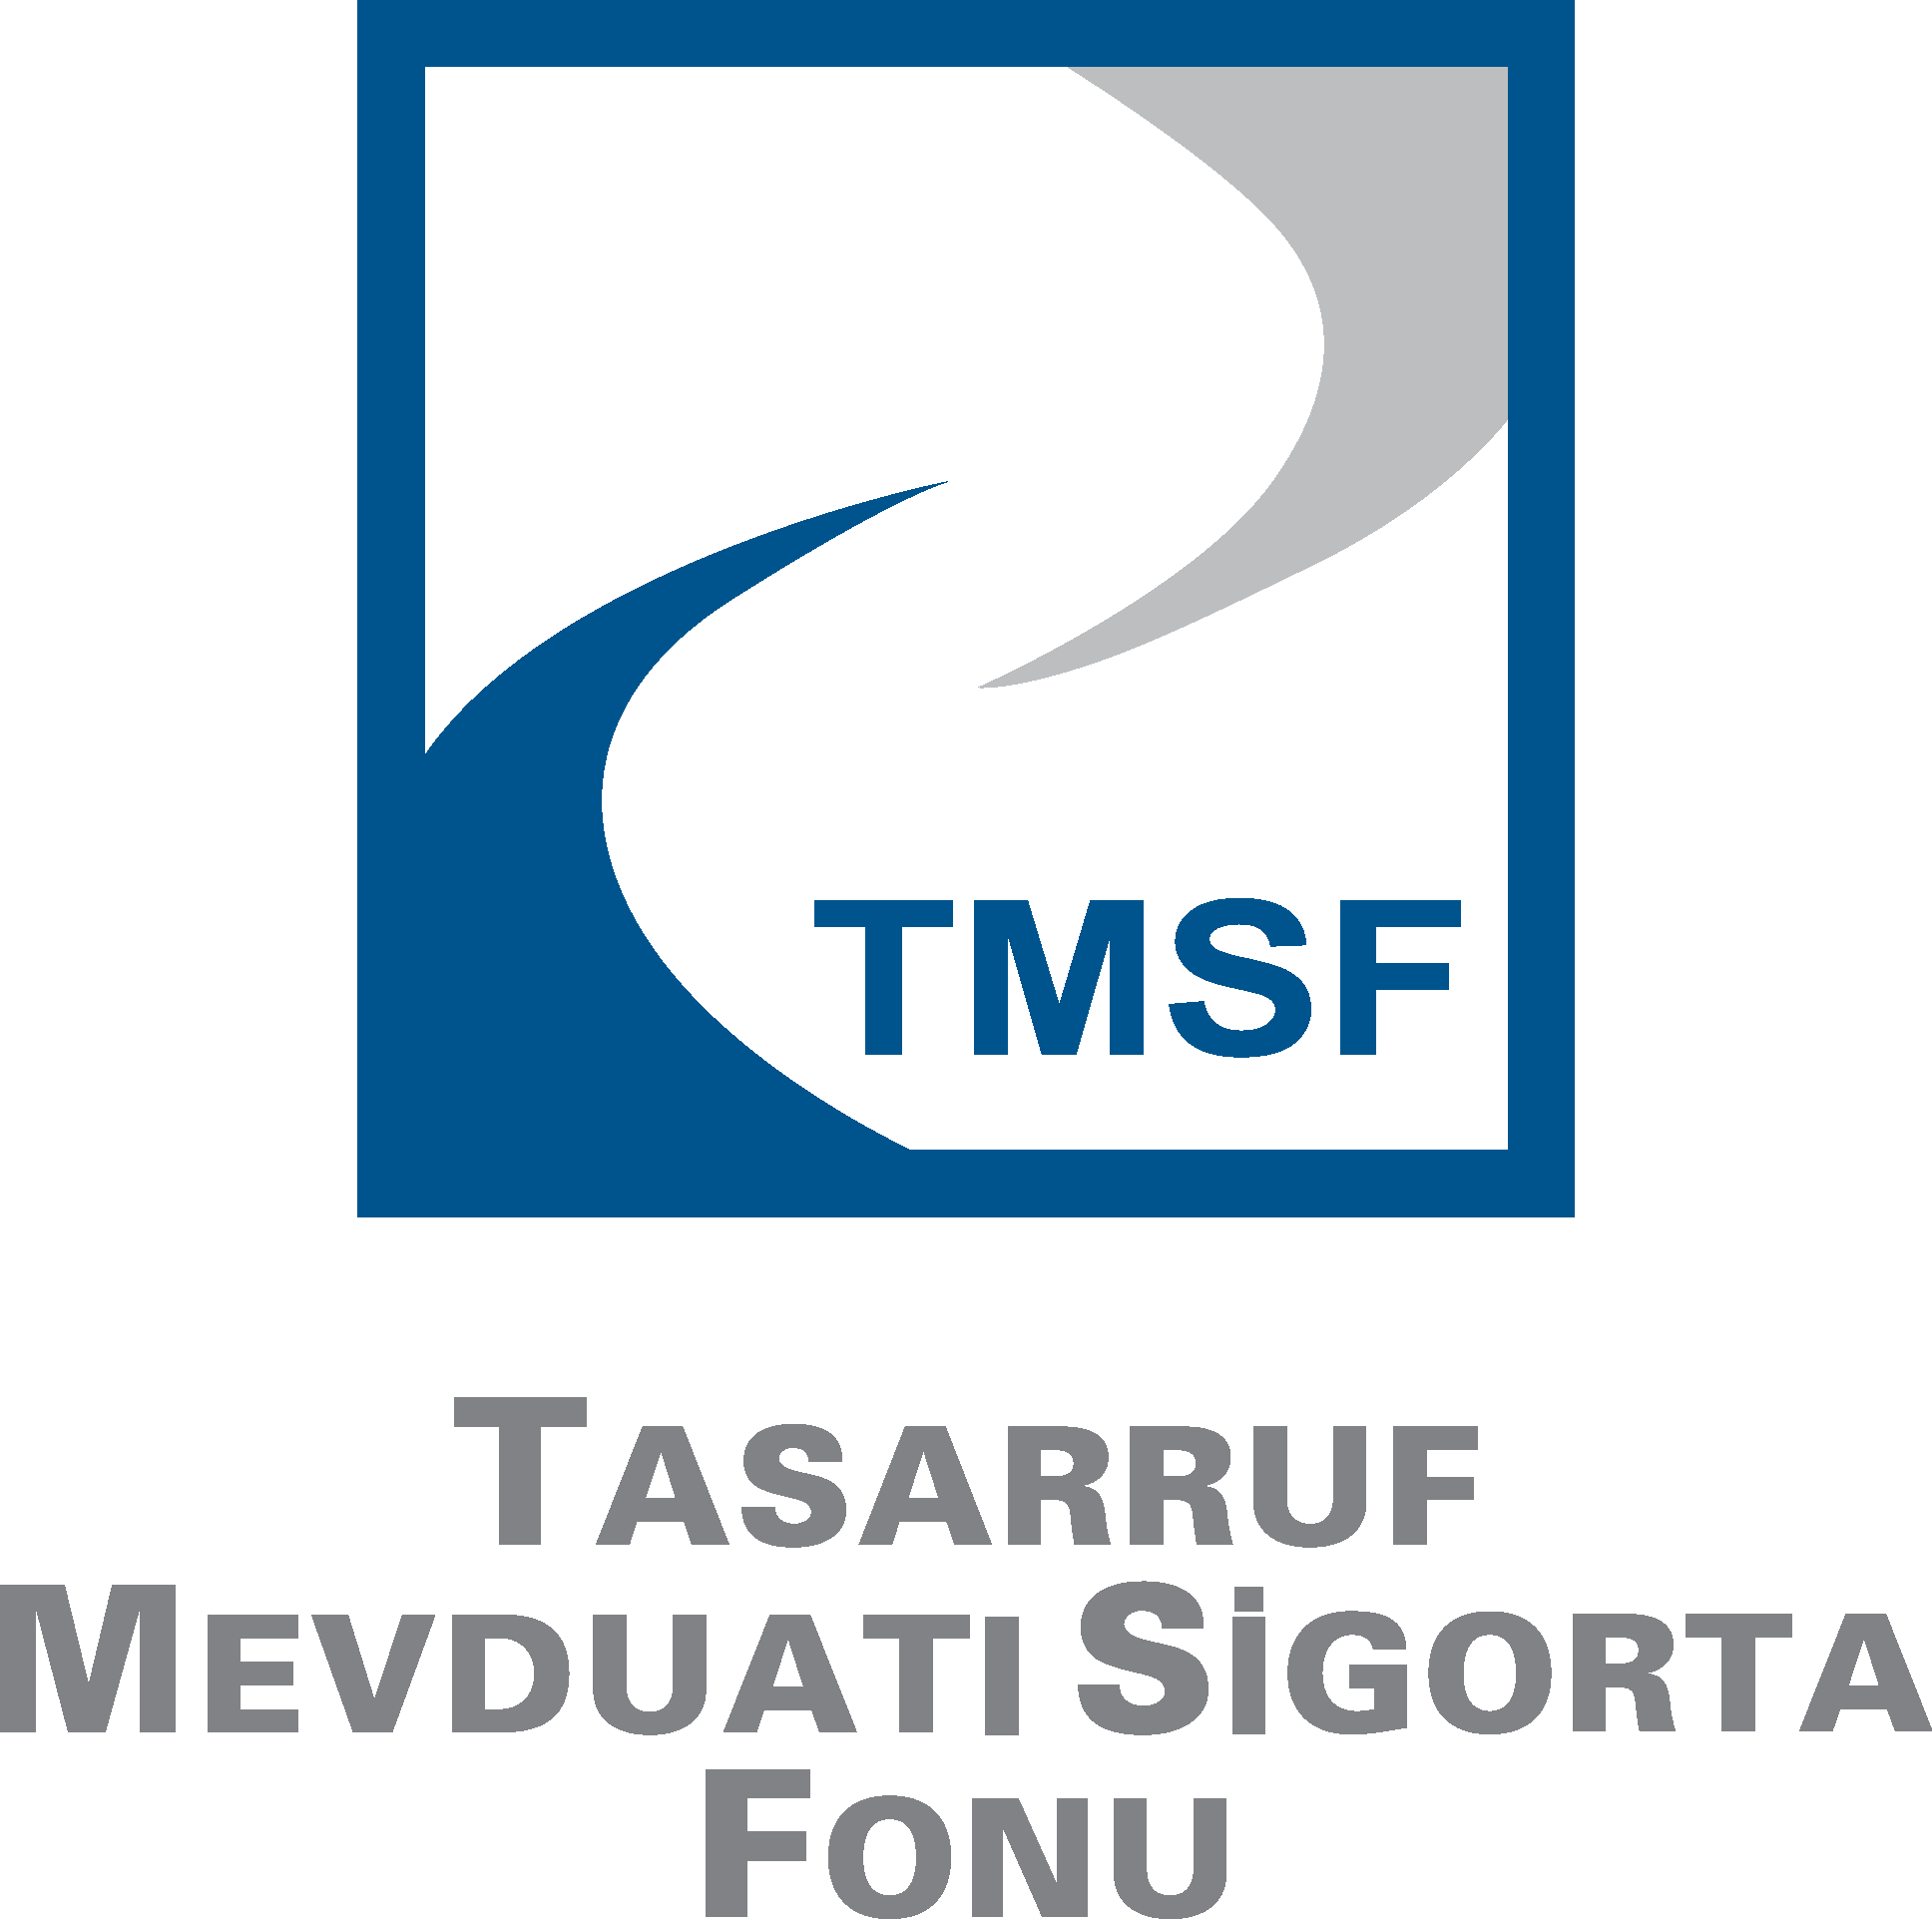 TMSF Logo   Tasarruf Mevduatı Sigorta Fonu png